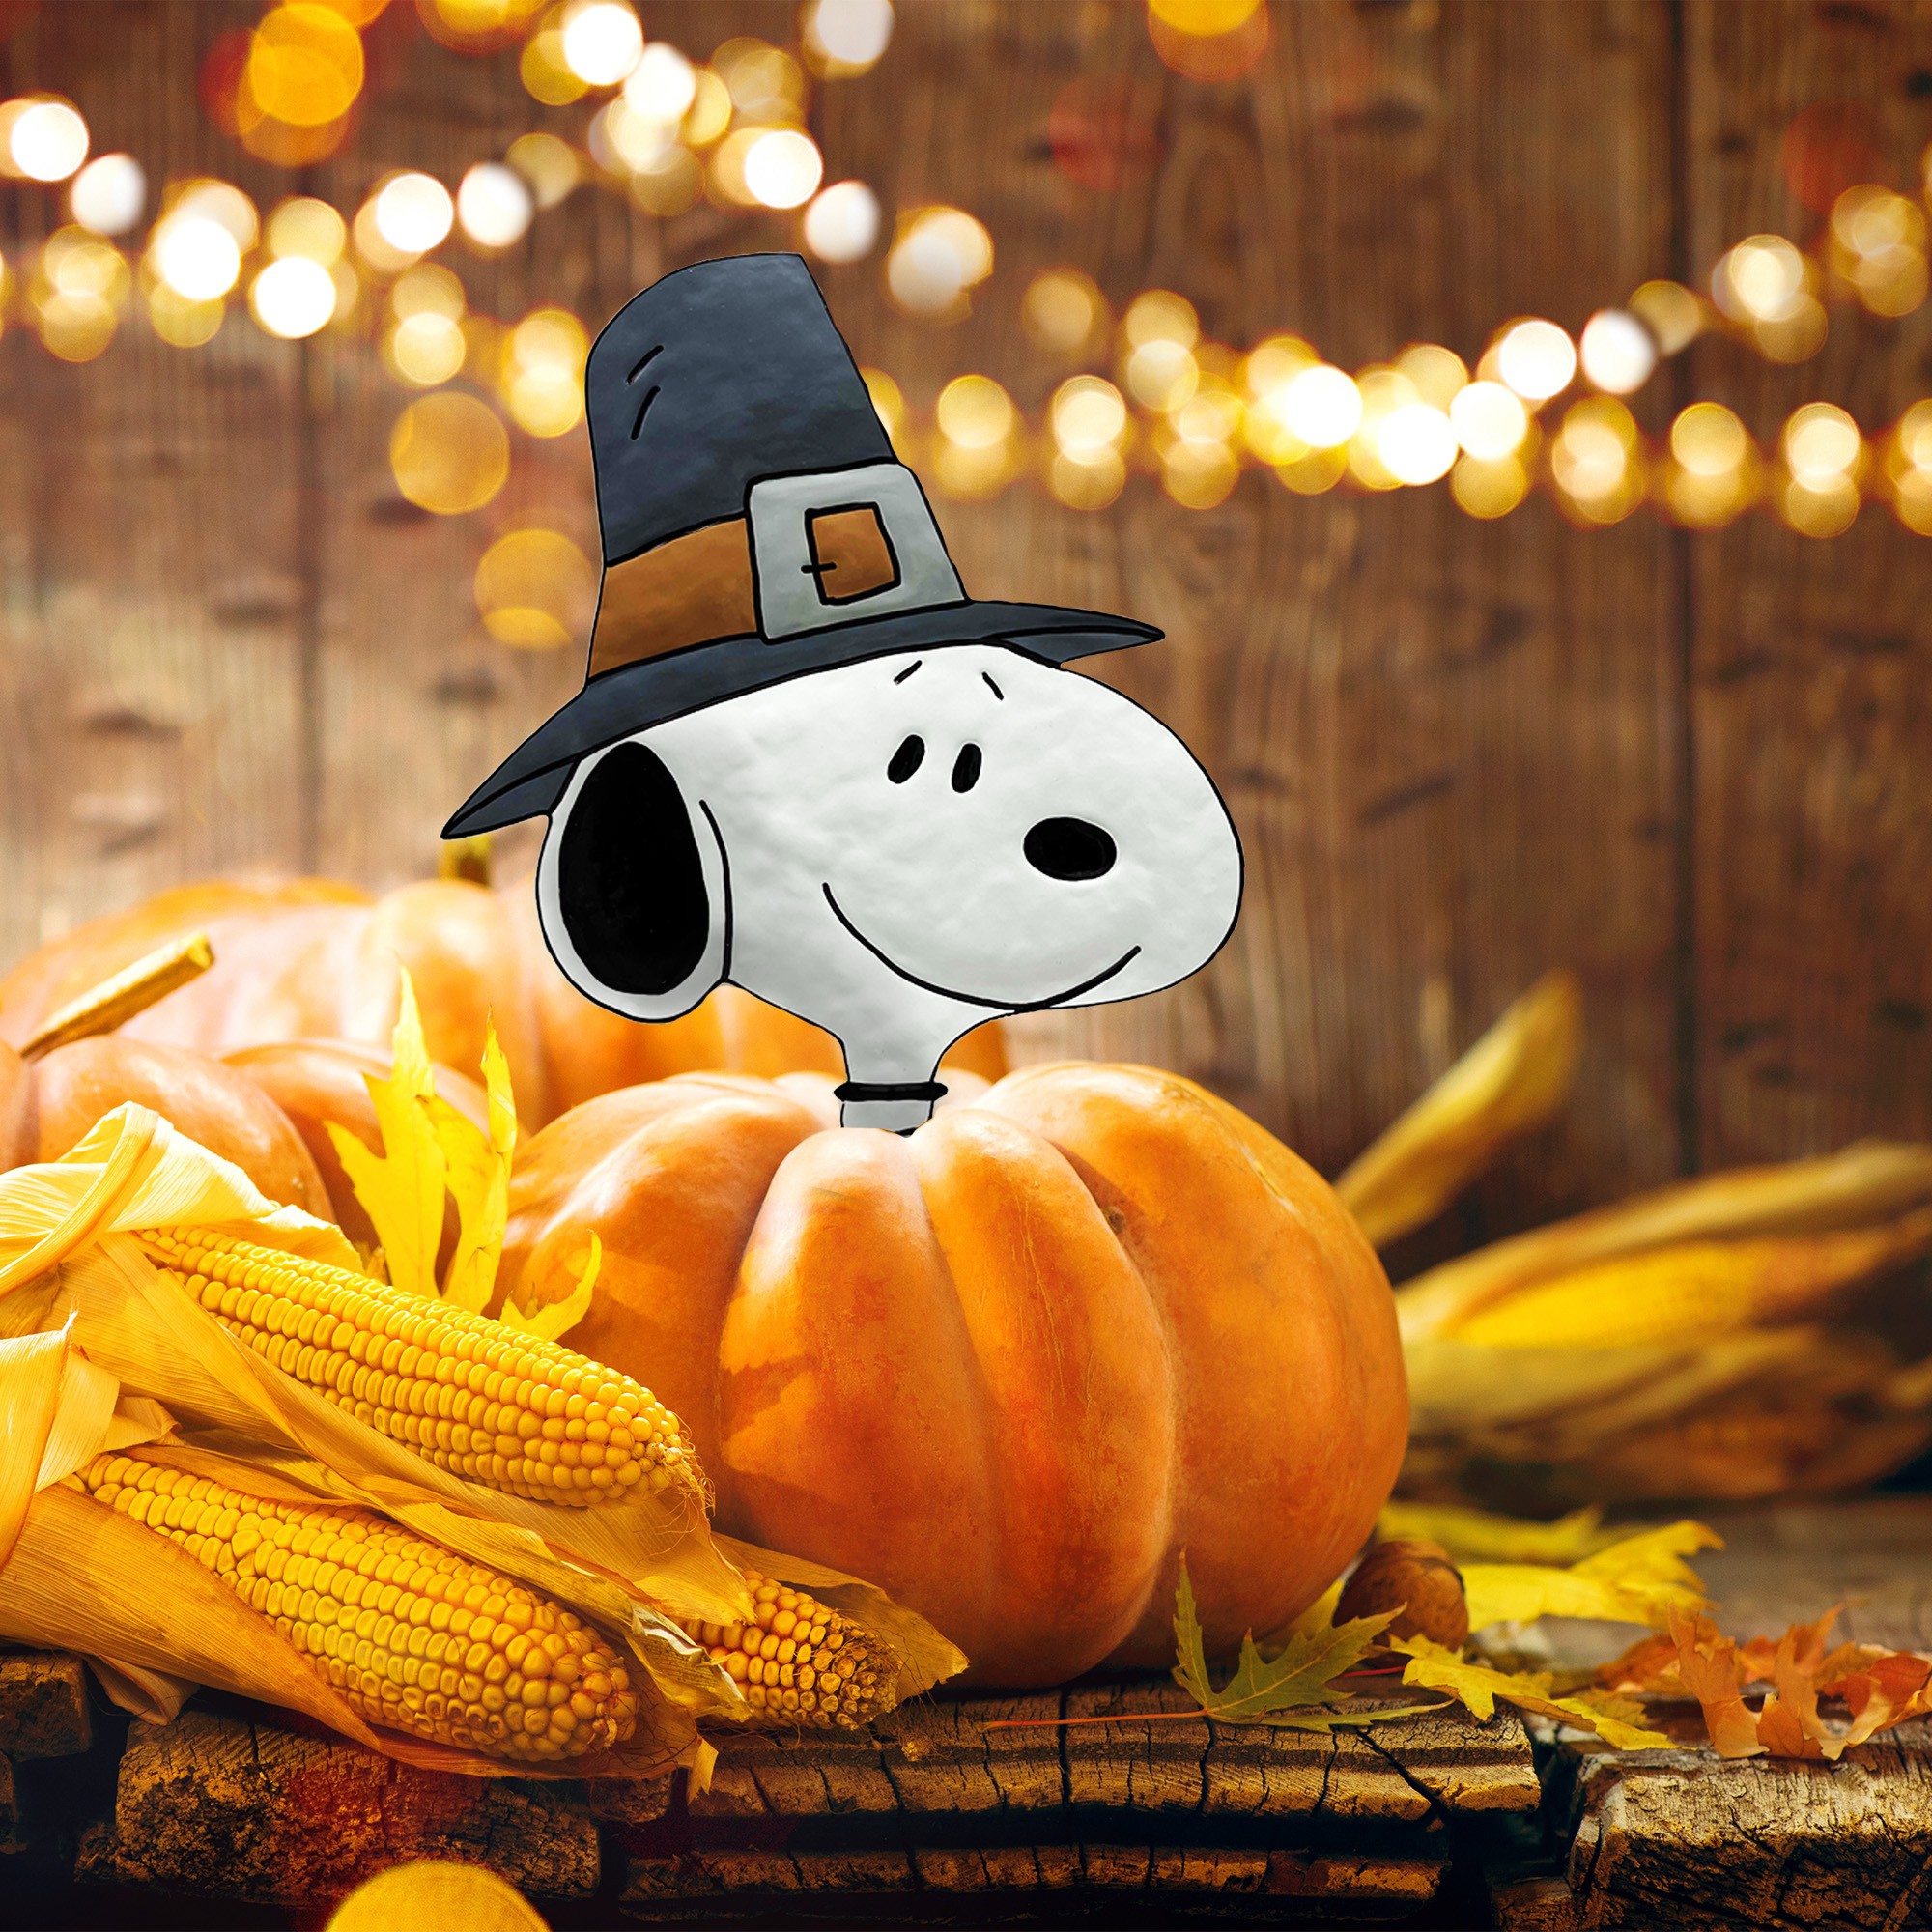 Peanuts Snoopy Pilgrim Pumpkin Press-in 10 inch icon